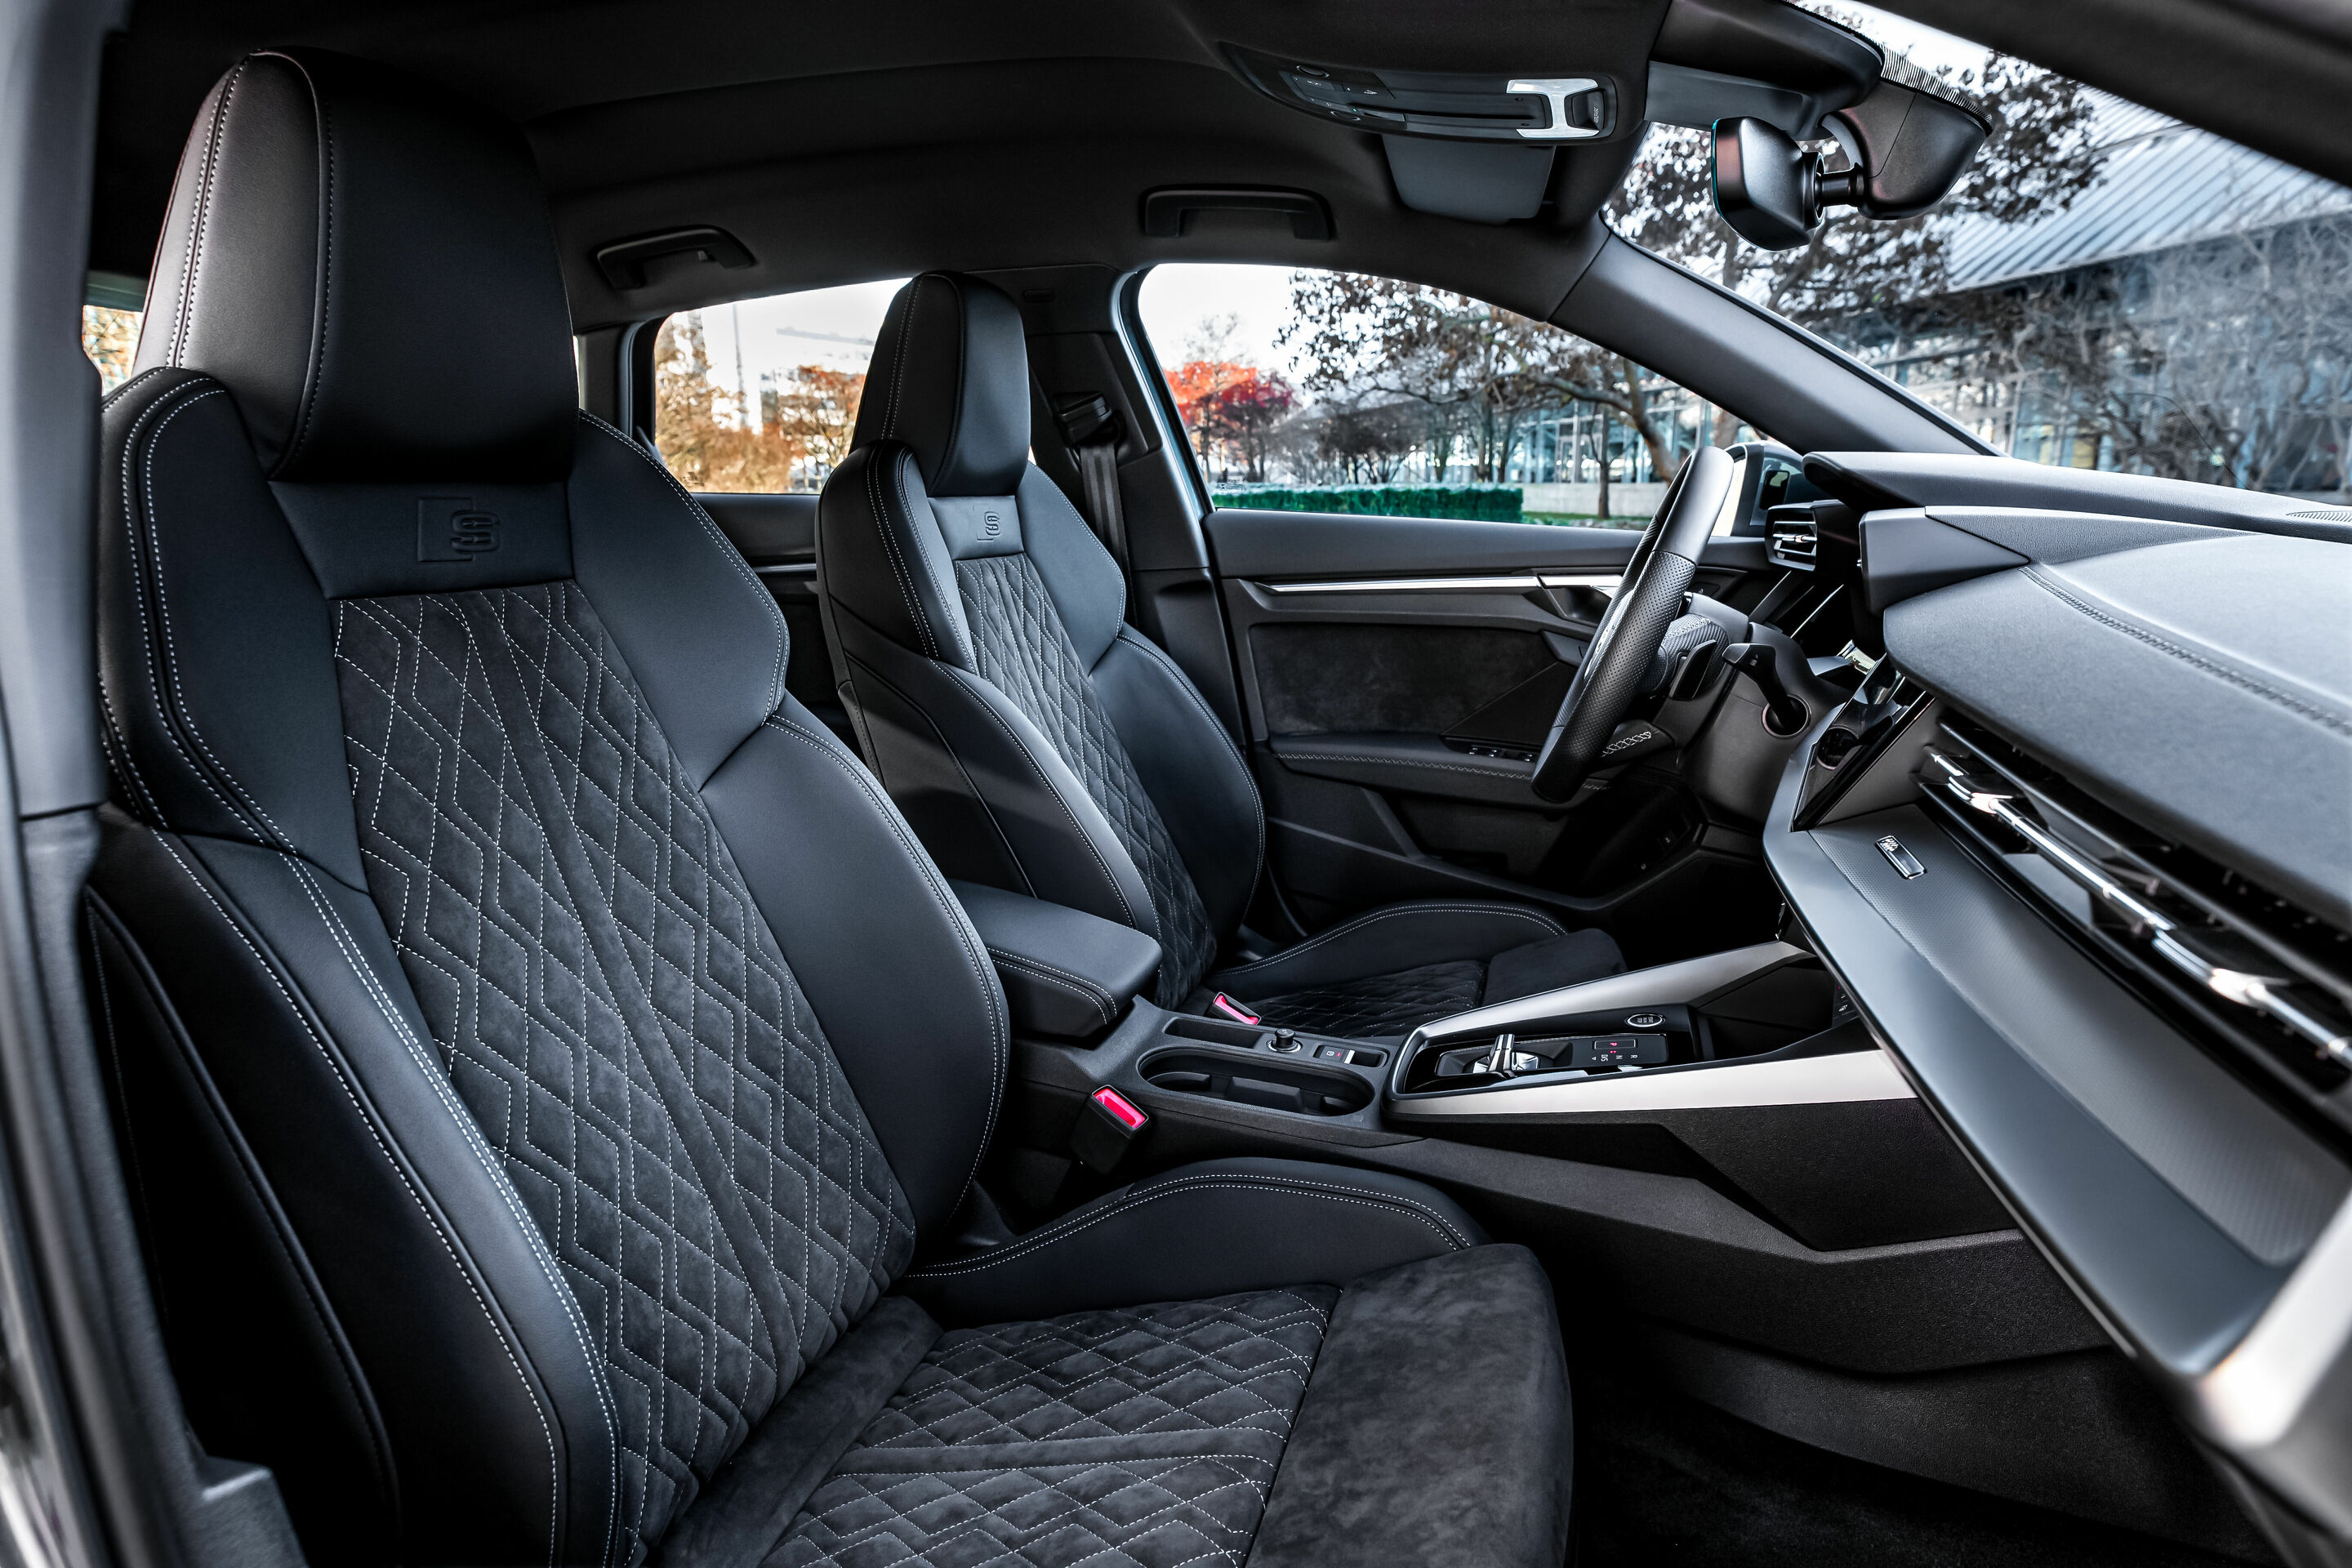 Entry into the world of PHEV: the Audi A3 Sportback TFSI e